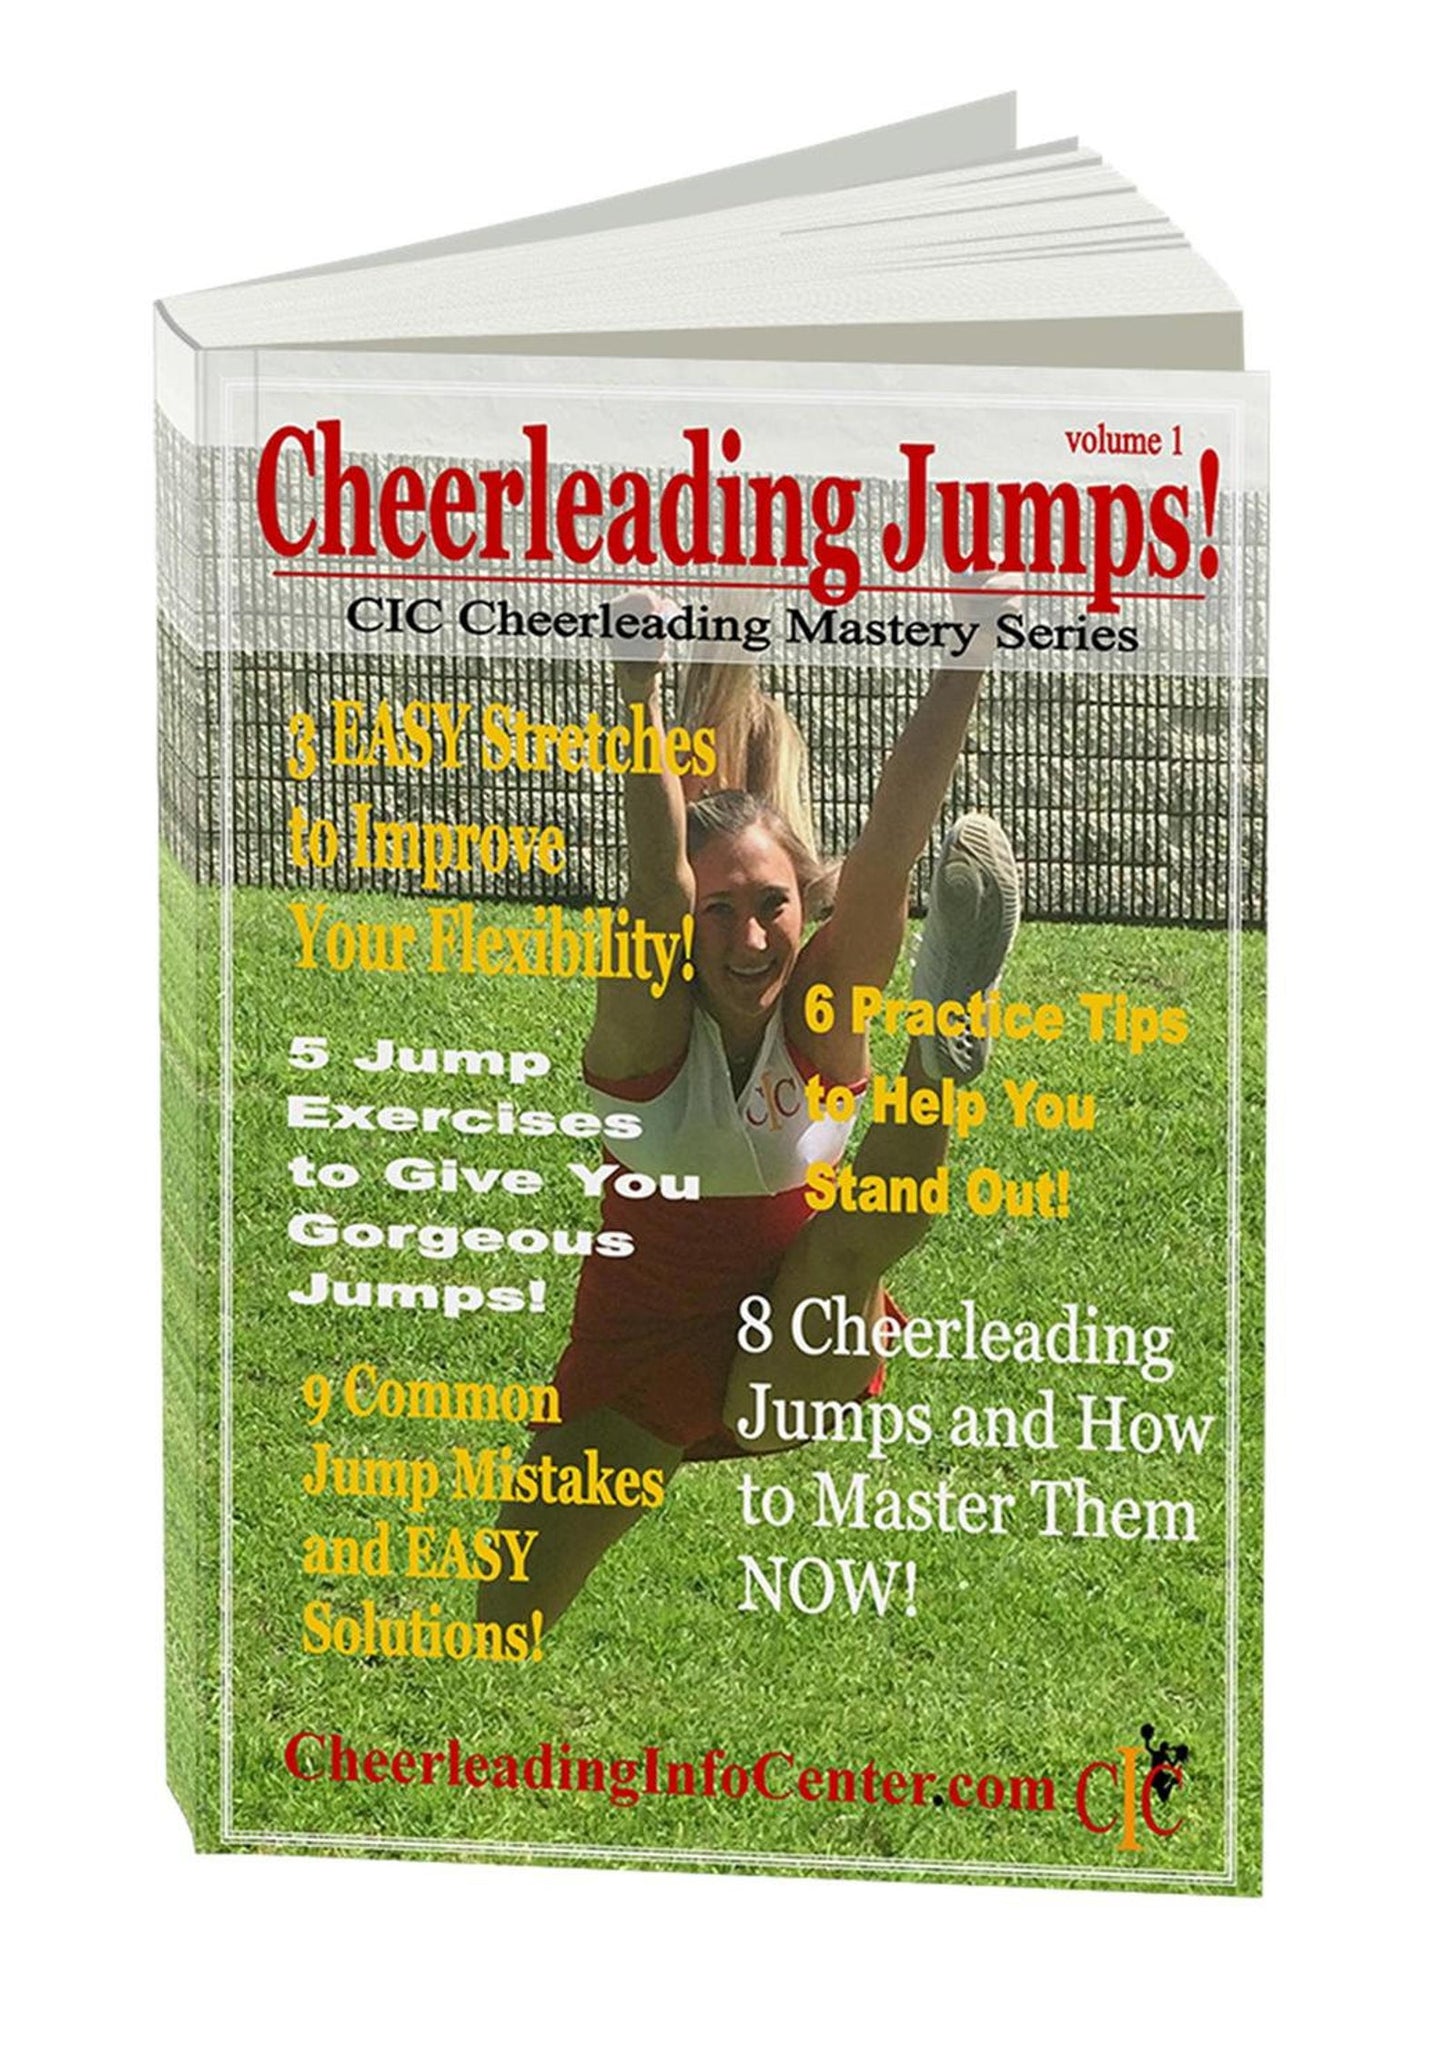 Cheerleading Jumps Ebook - How to Do Cheerleading Jumps - Cheer and Dance On Demand